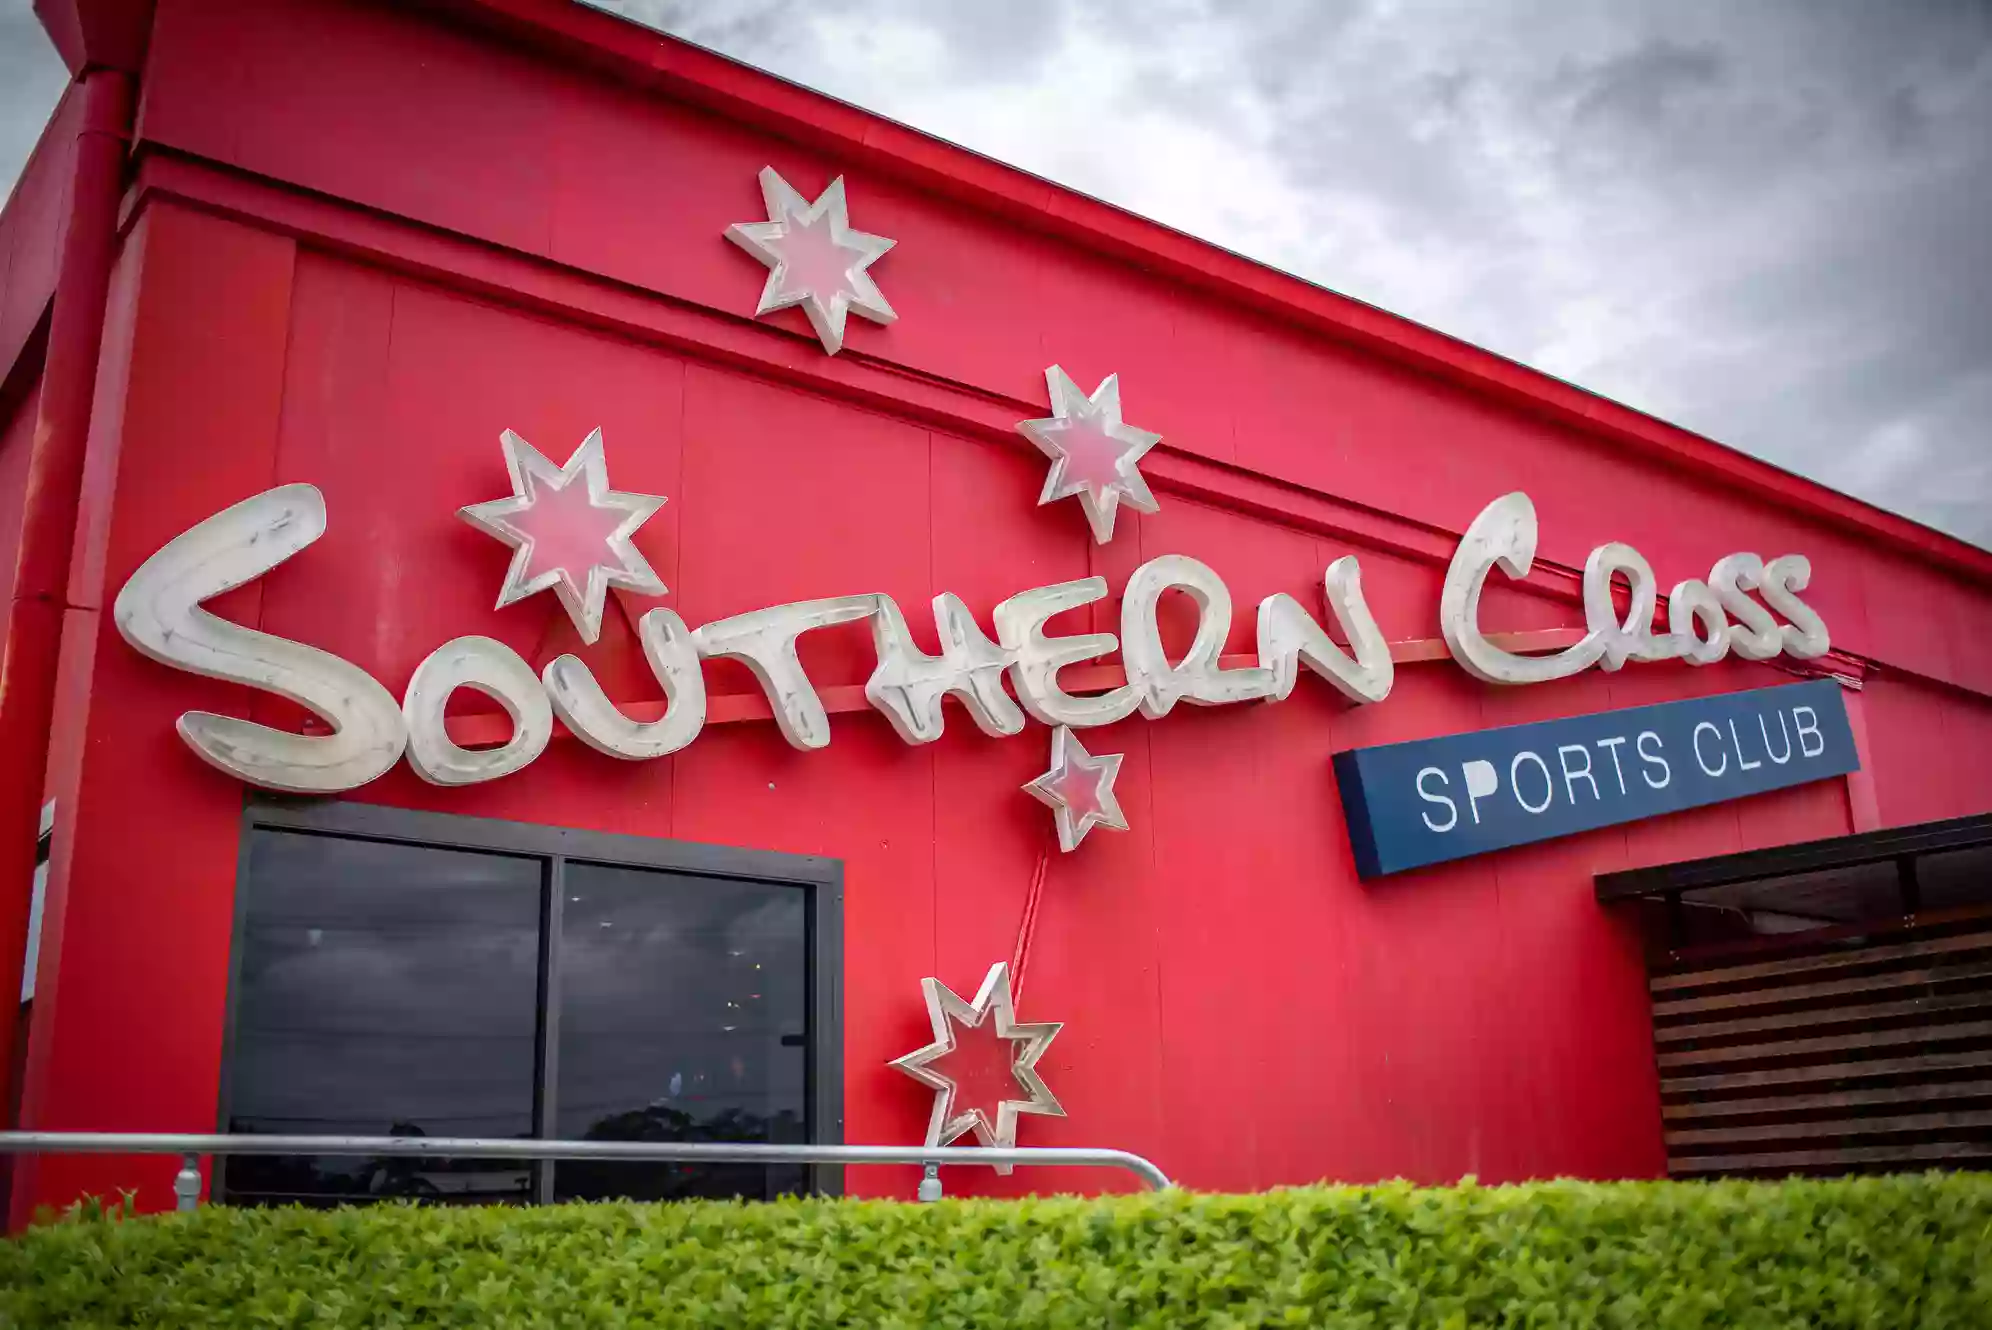 Southern Cross Sports Club